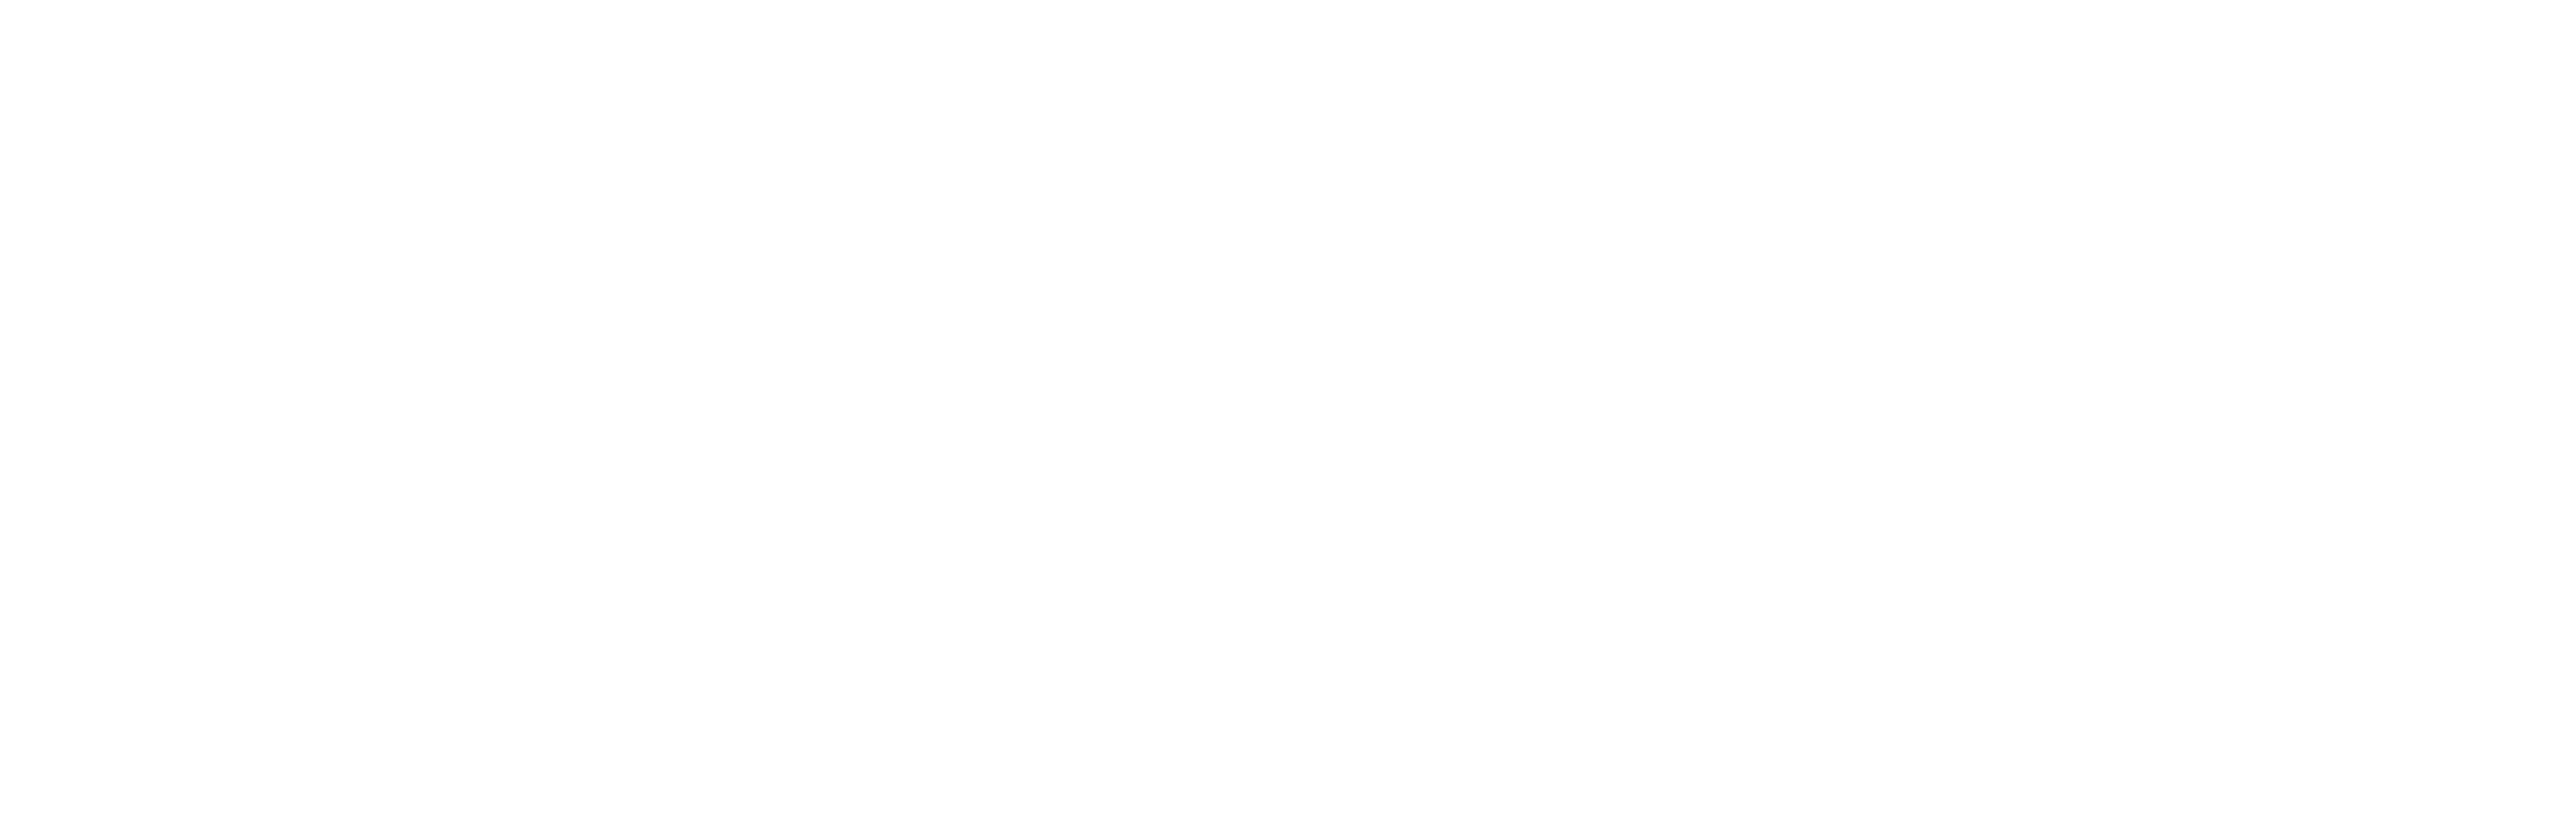 gozetci.az_logo_2